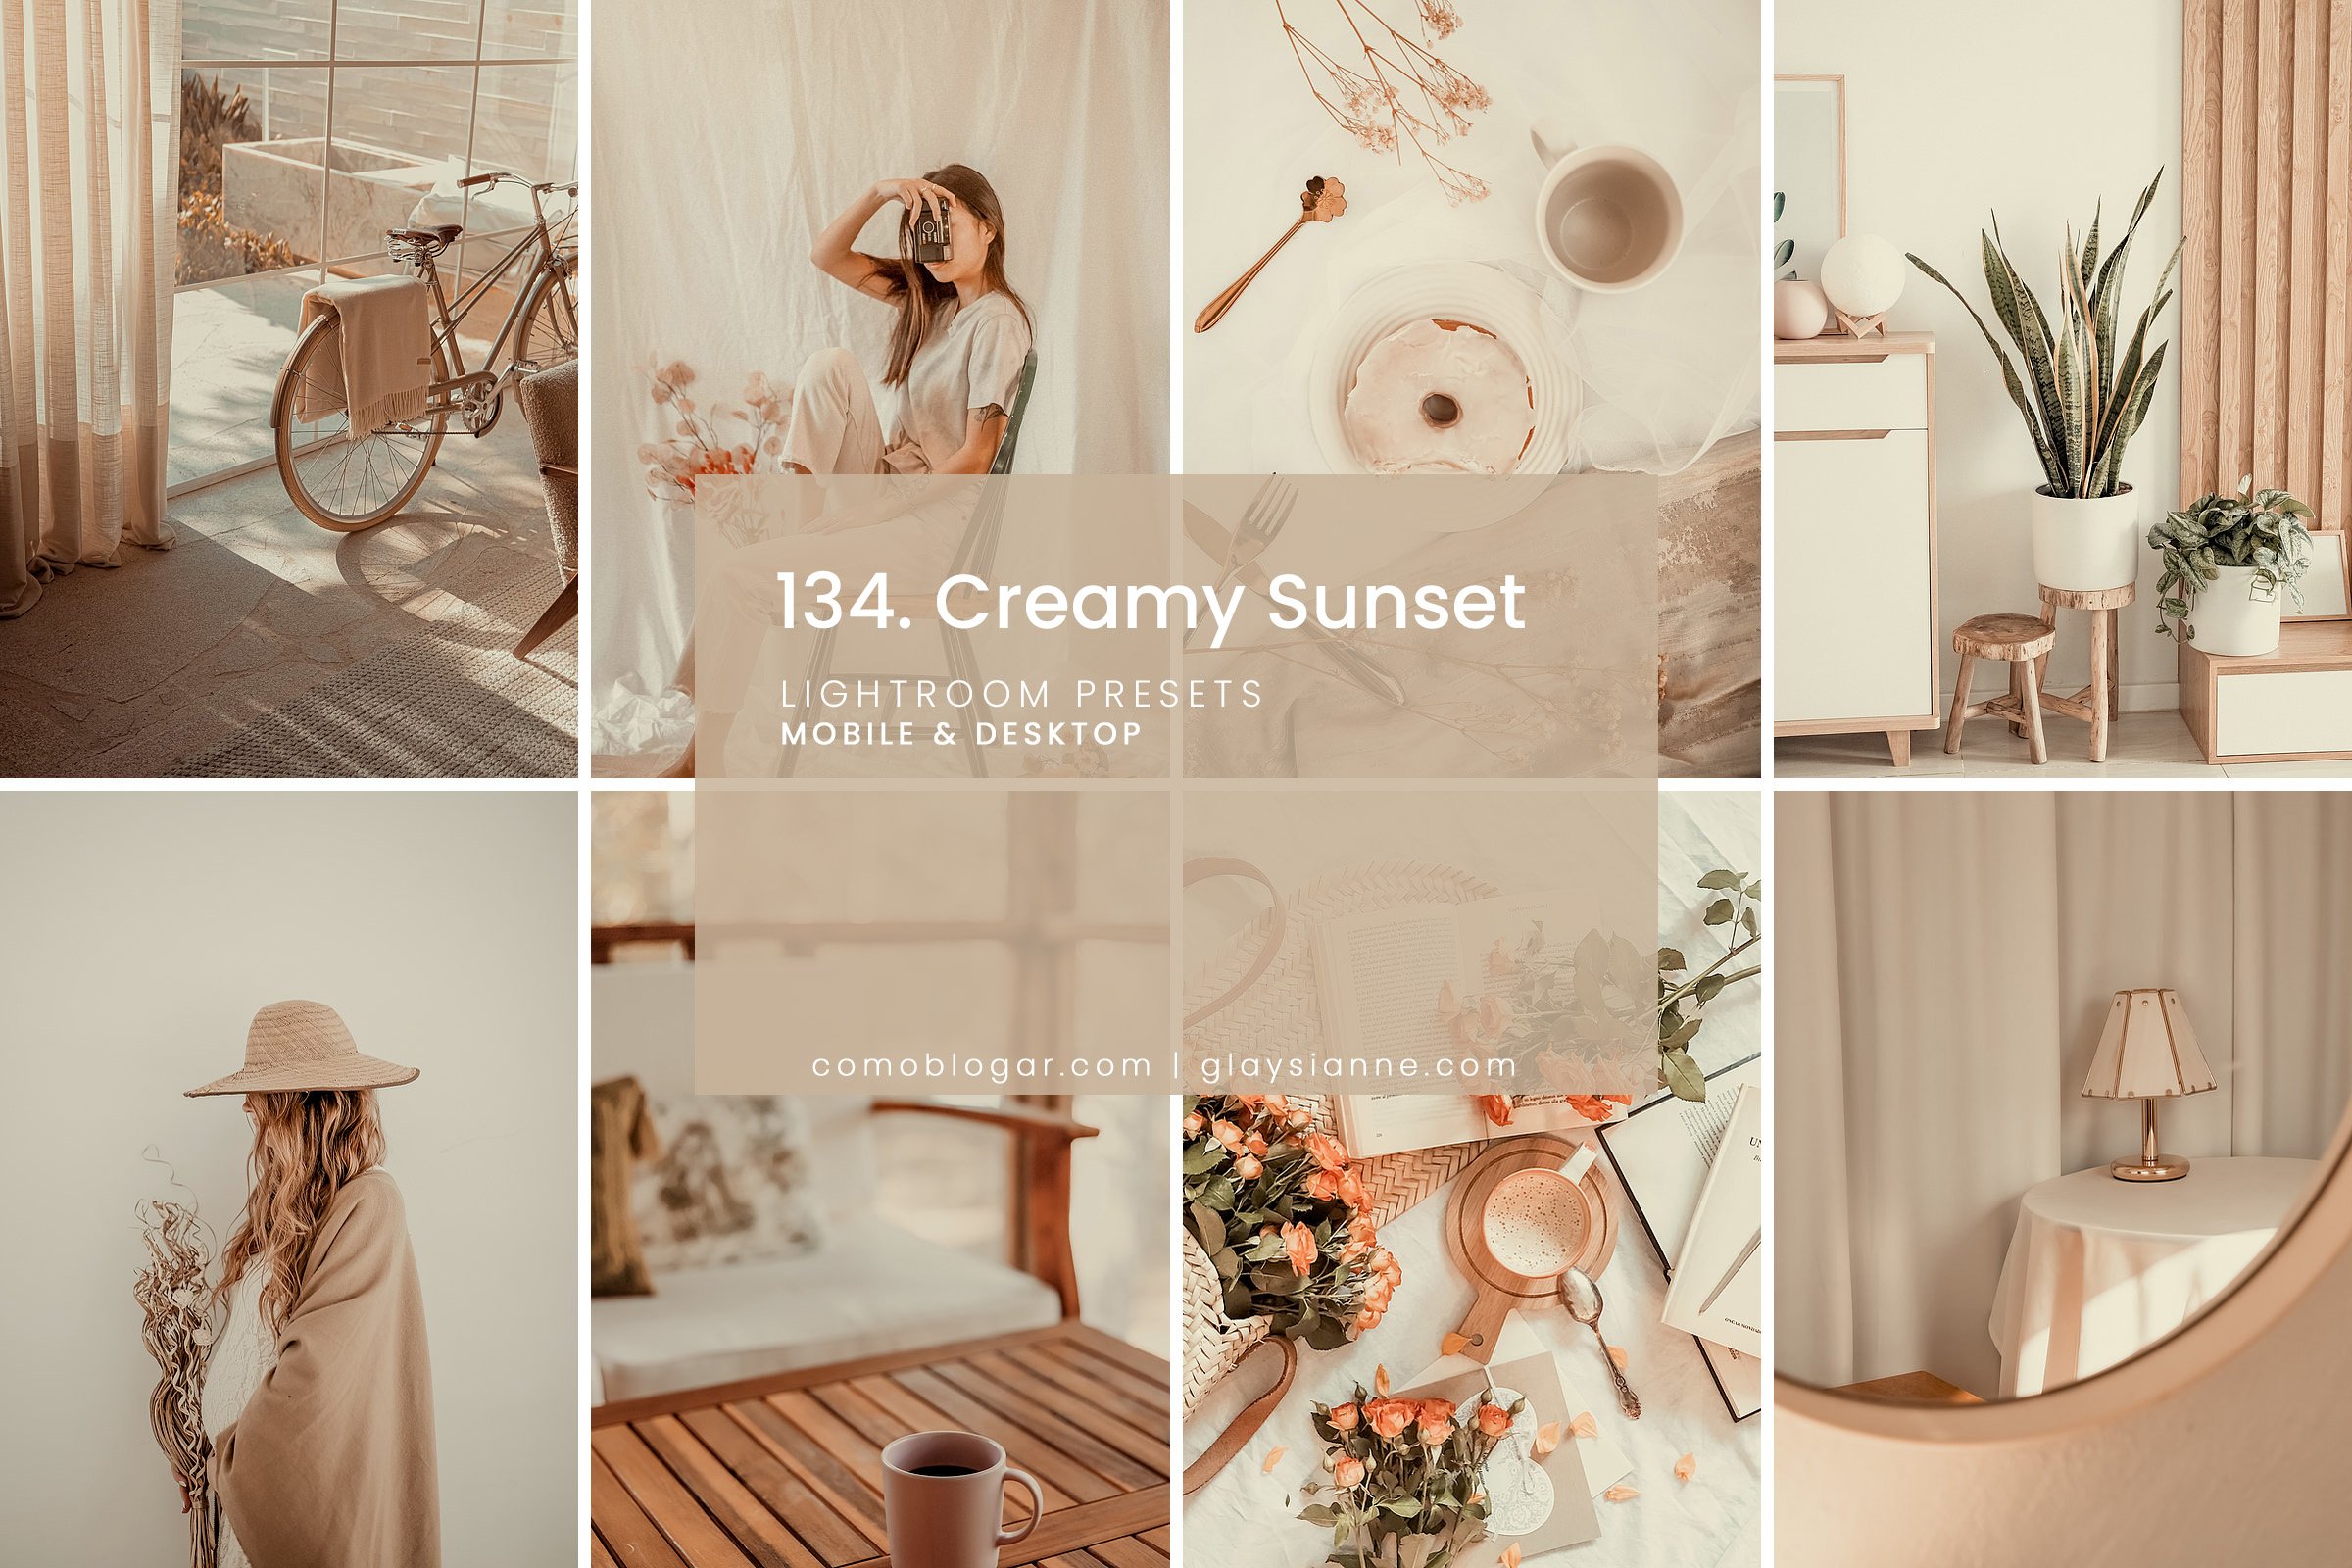 134. Creamy Sunsetcover image.